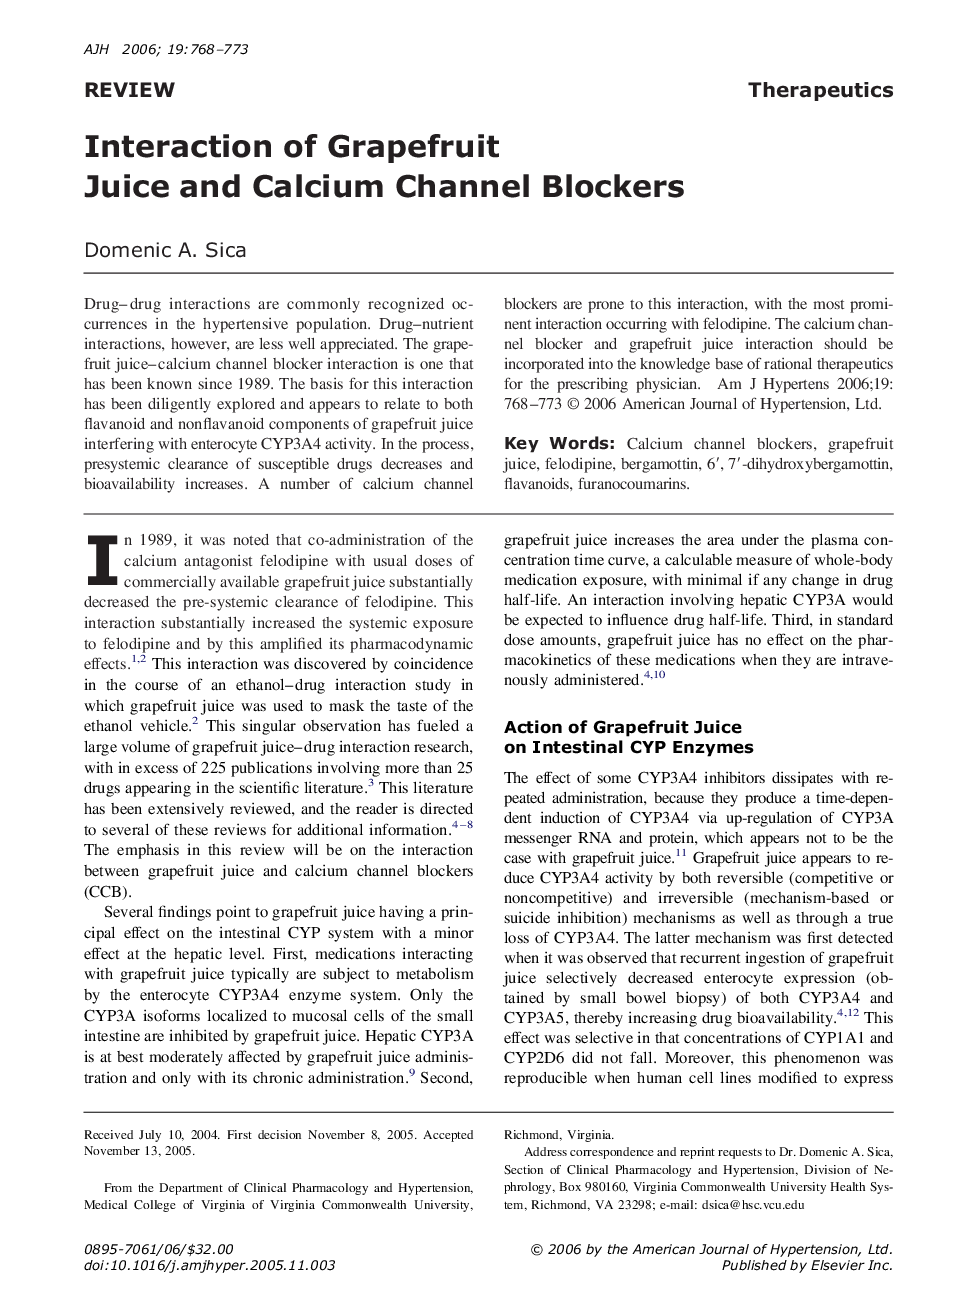 Interaction of Grapefruit Juice and Calcium Channel Blockers